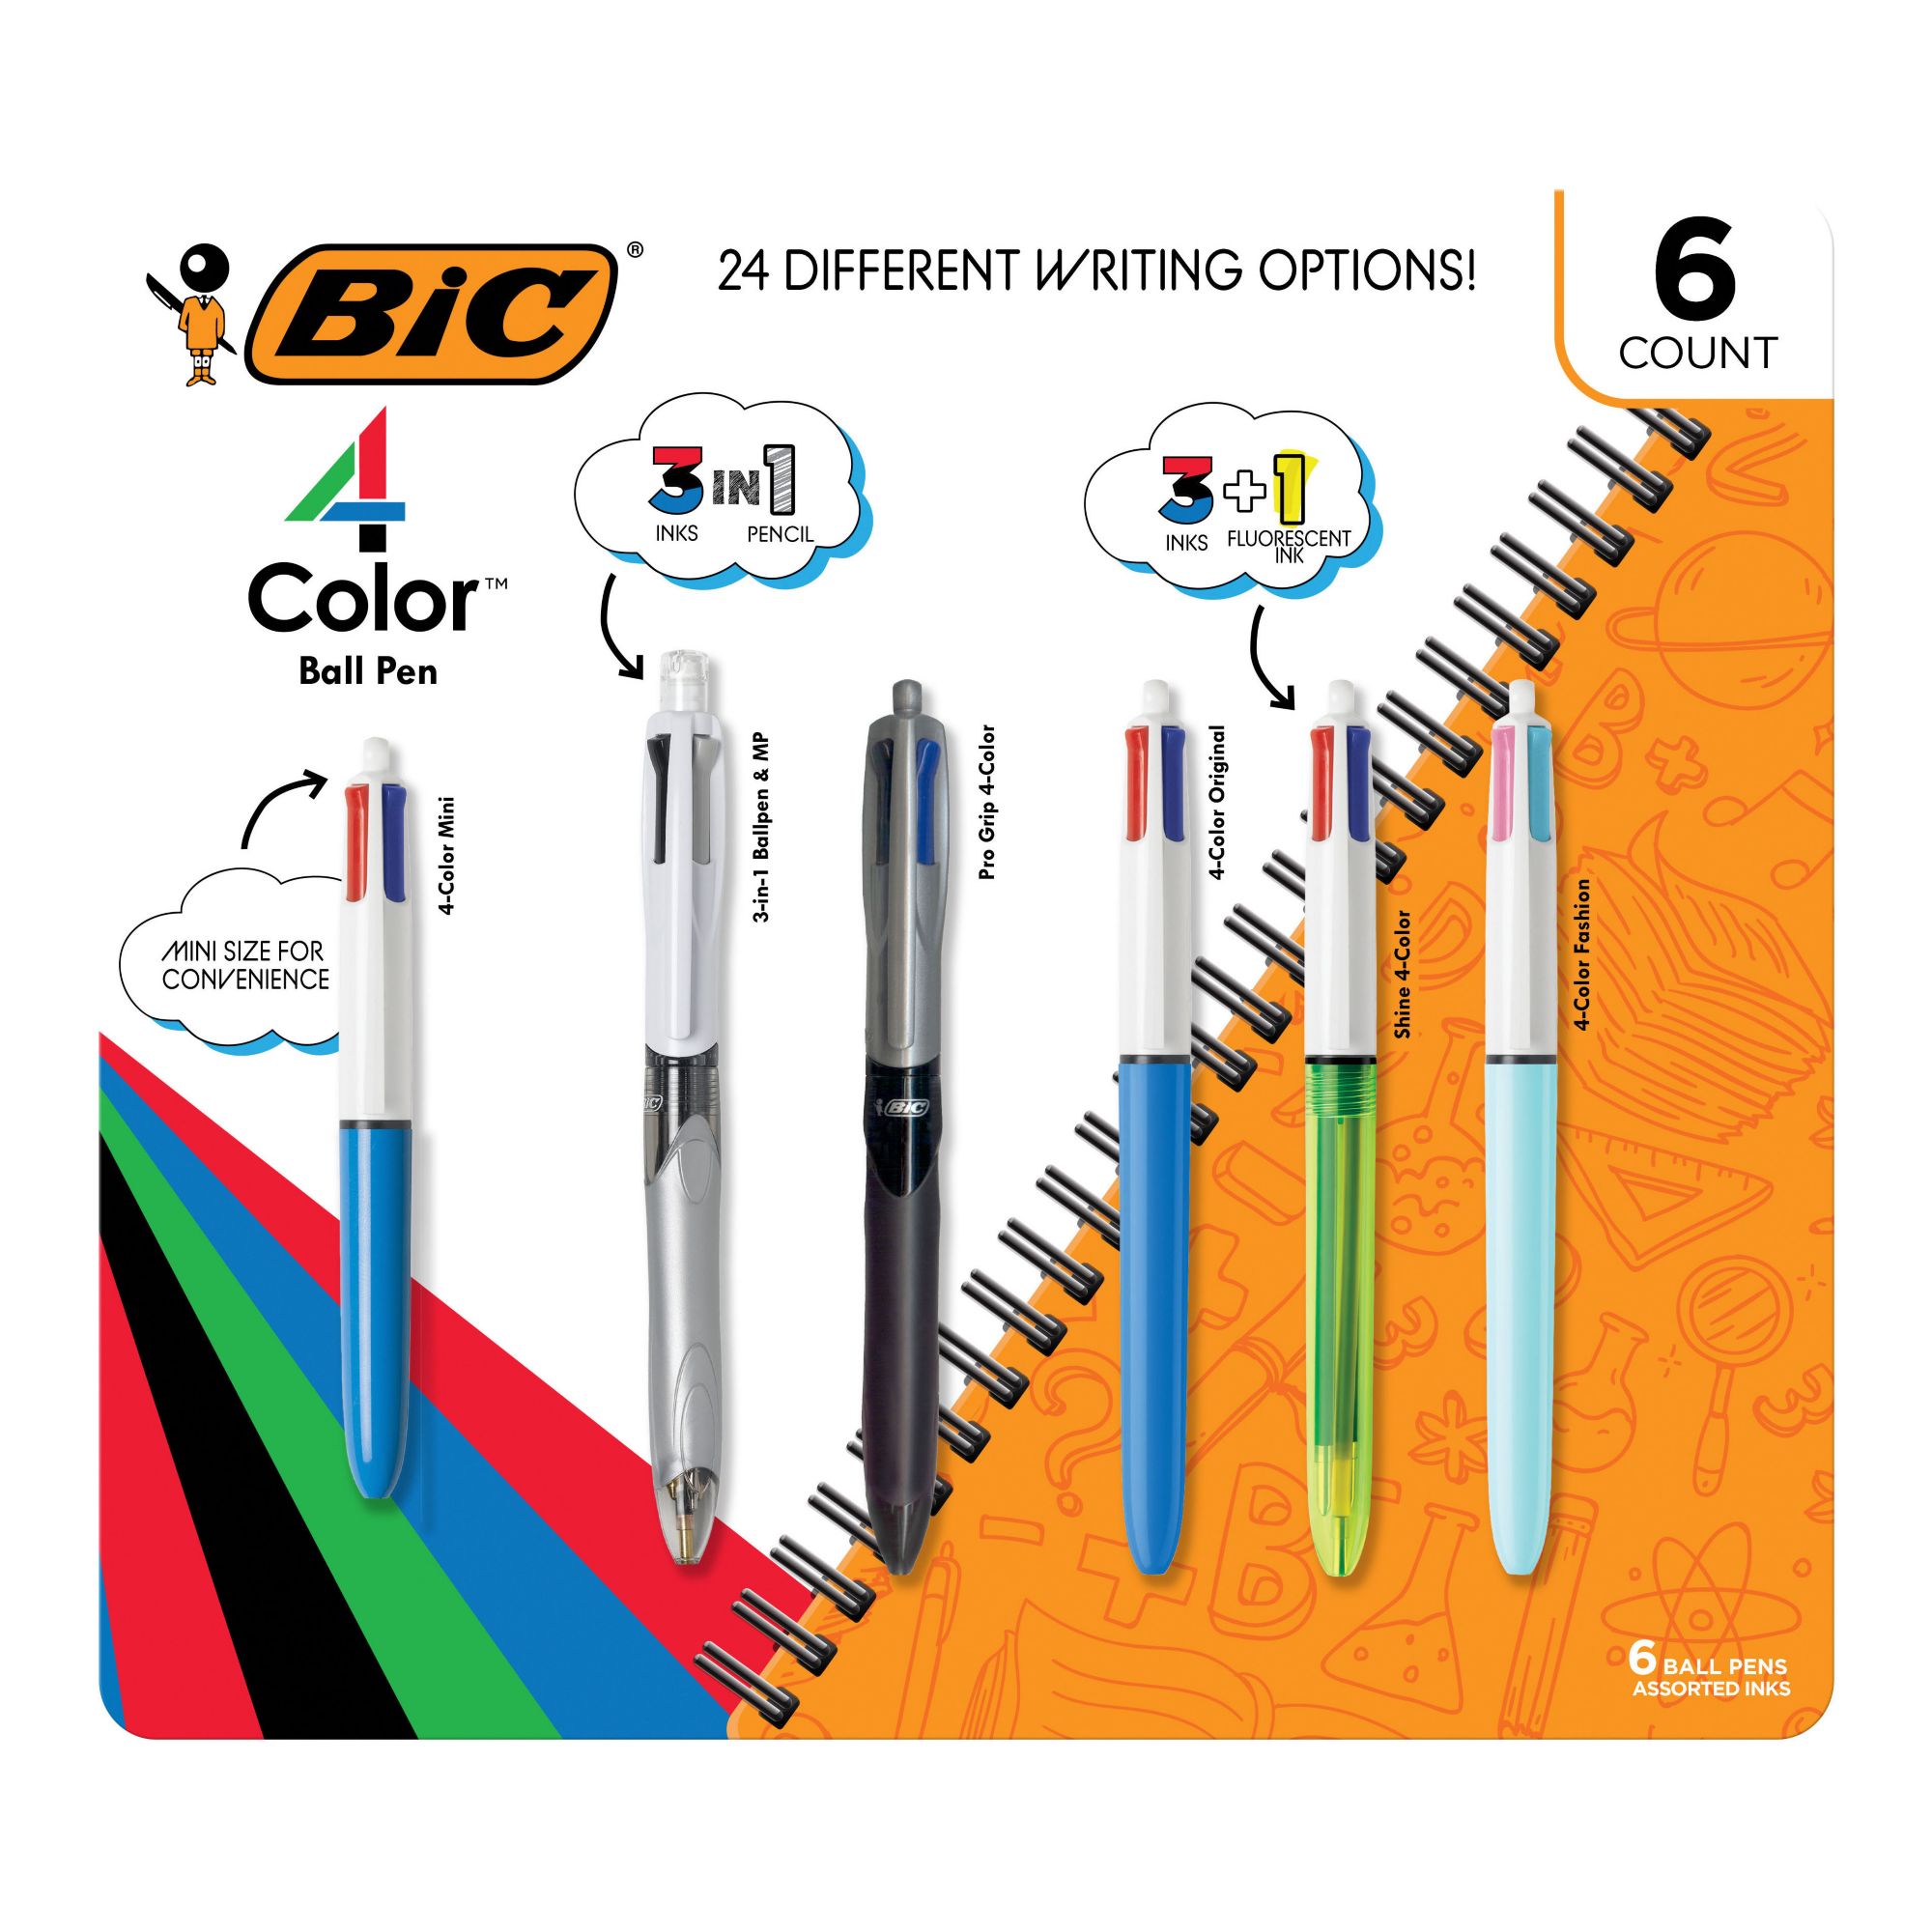 Bic Clip Pen - Accessories & Home Goods